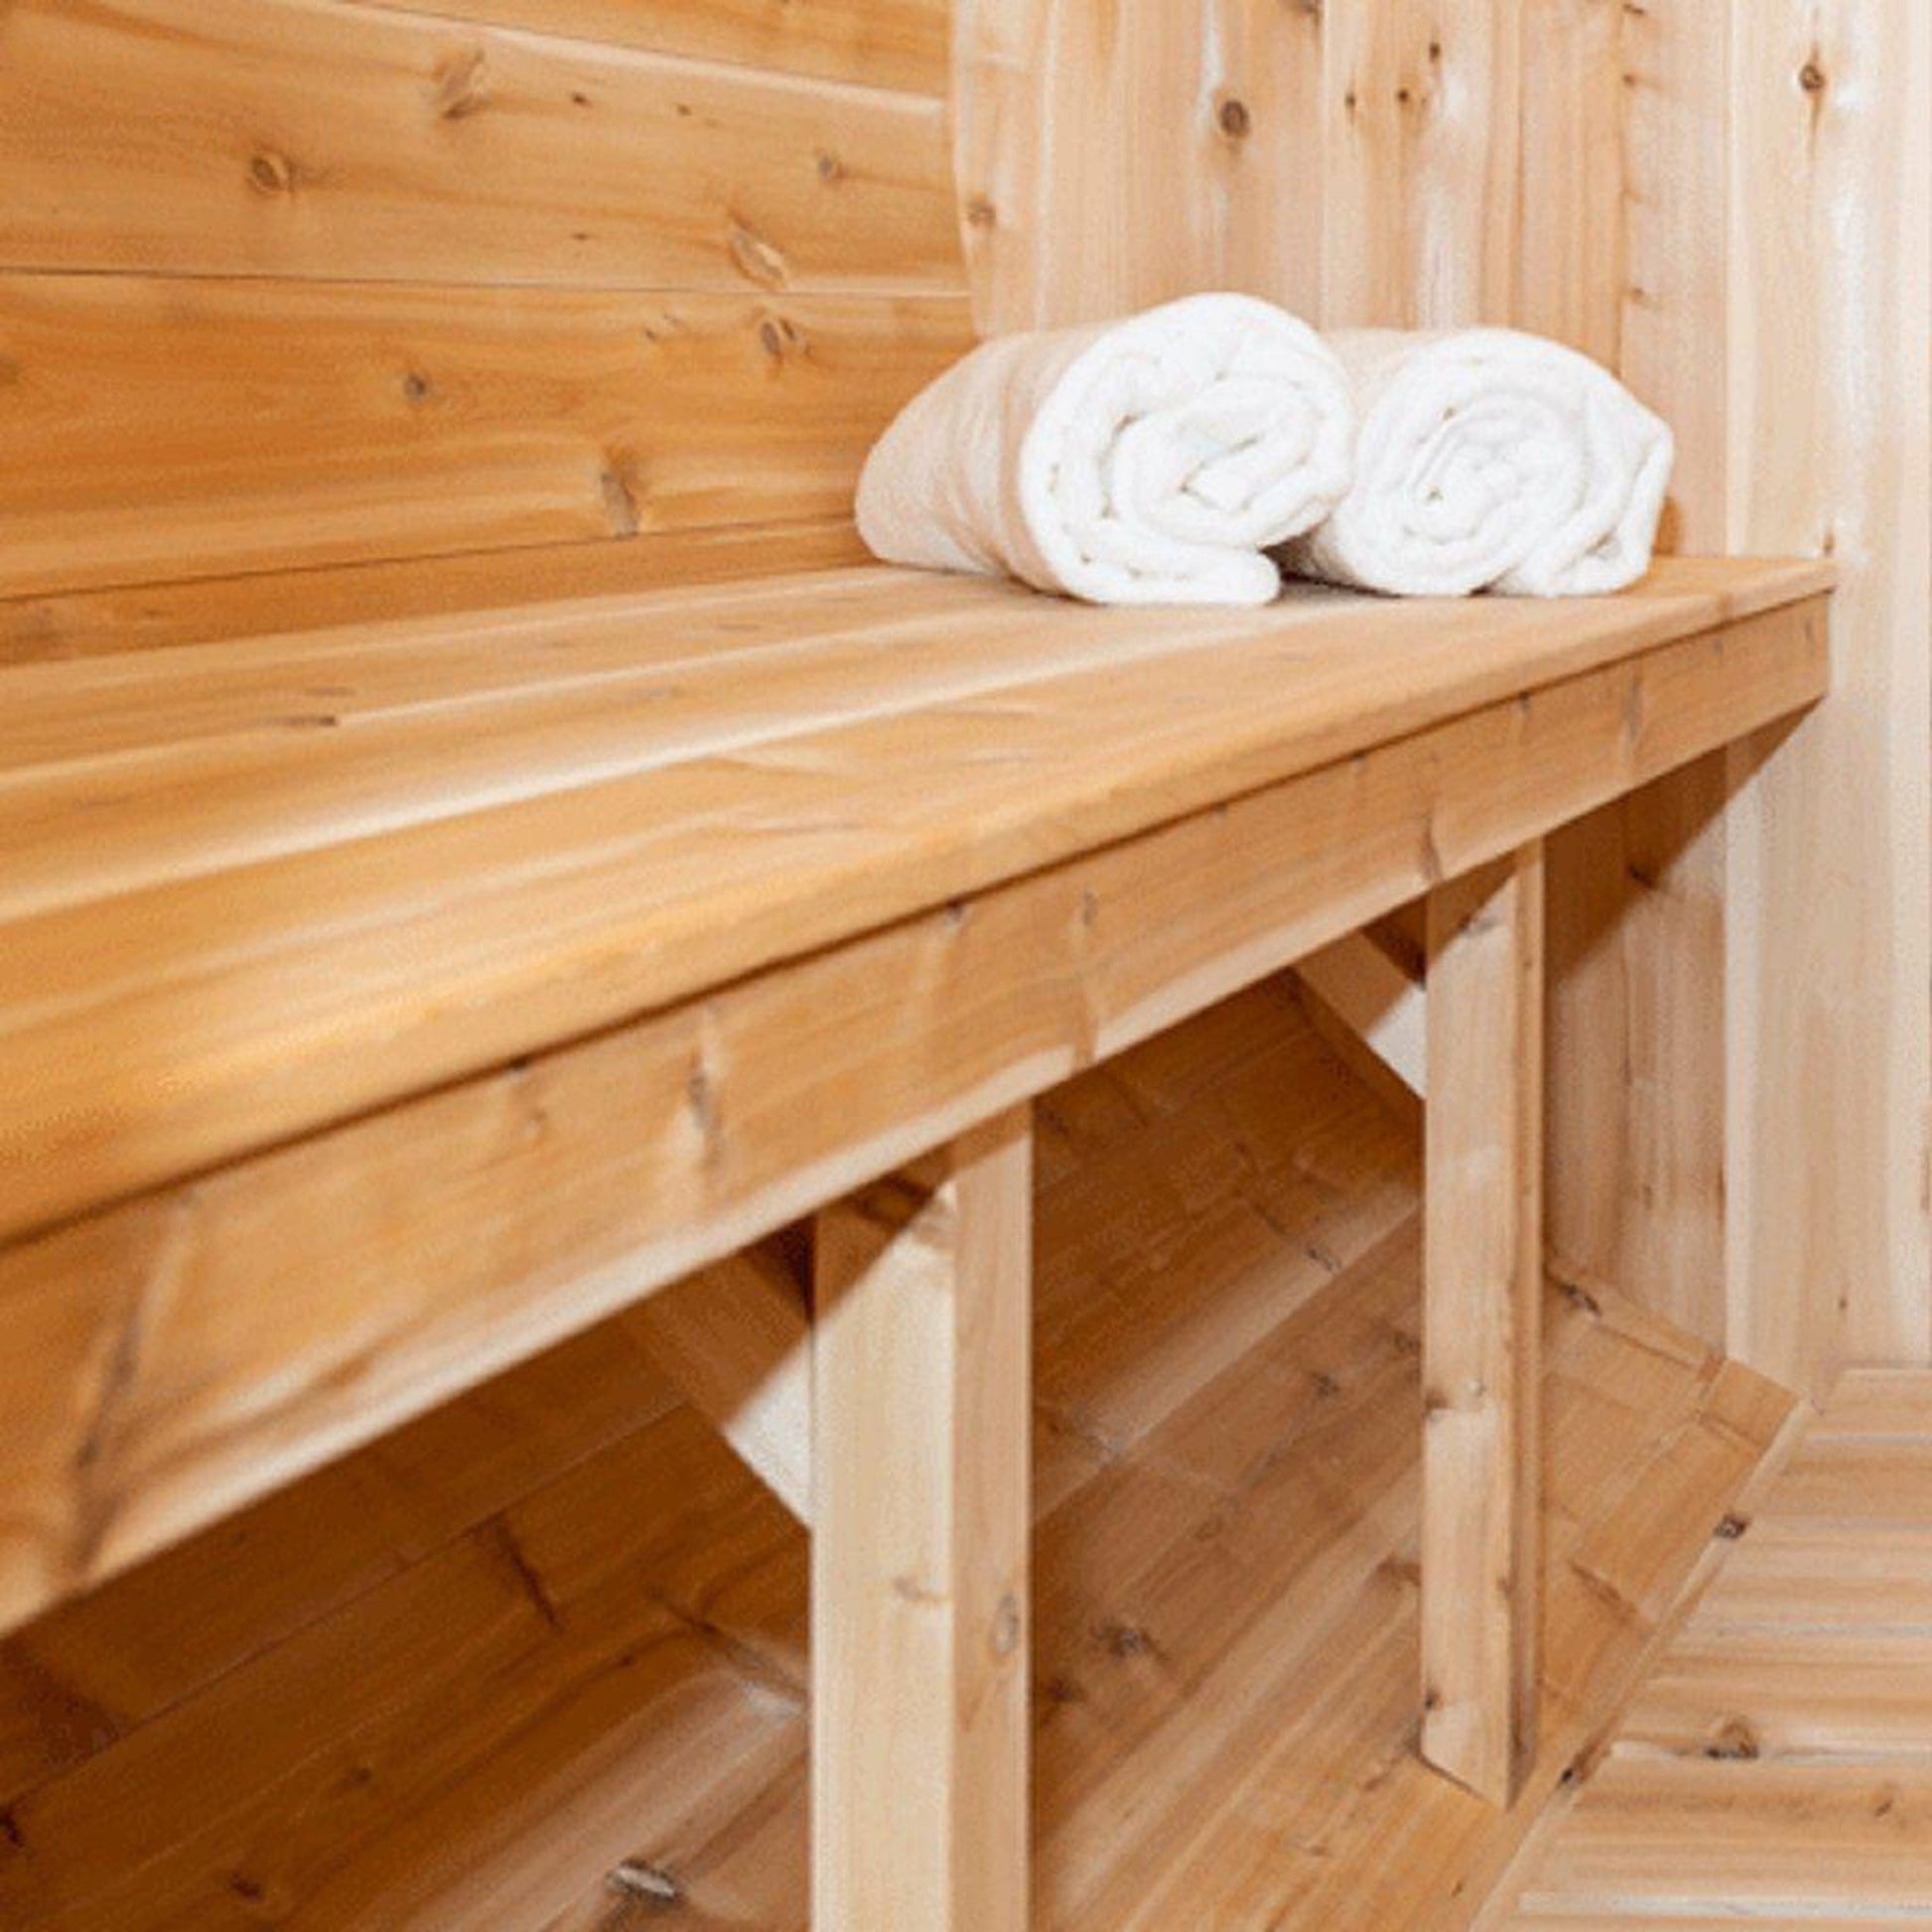 Dundalk LeisureCraft Canadian Timber Harmony 2-4 Person White Cedar Outdoor Barrel Sauna